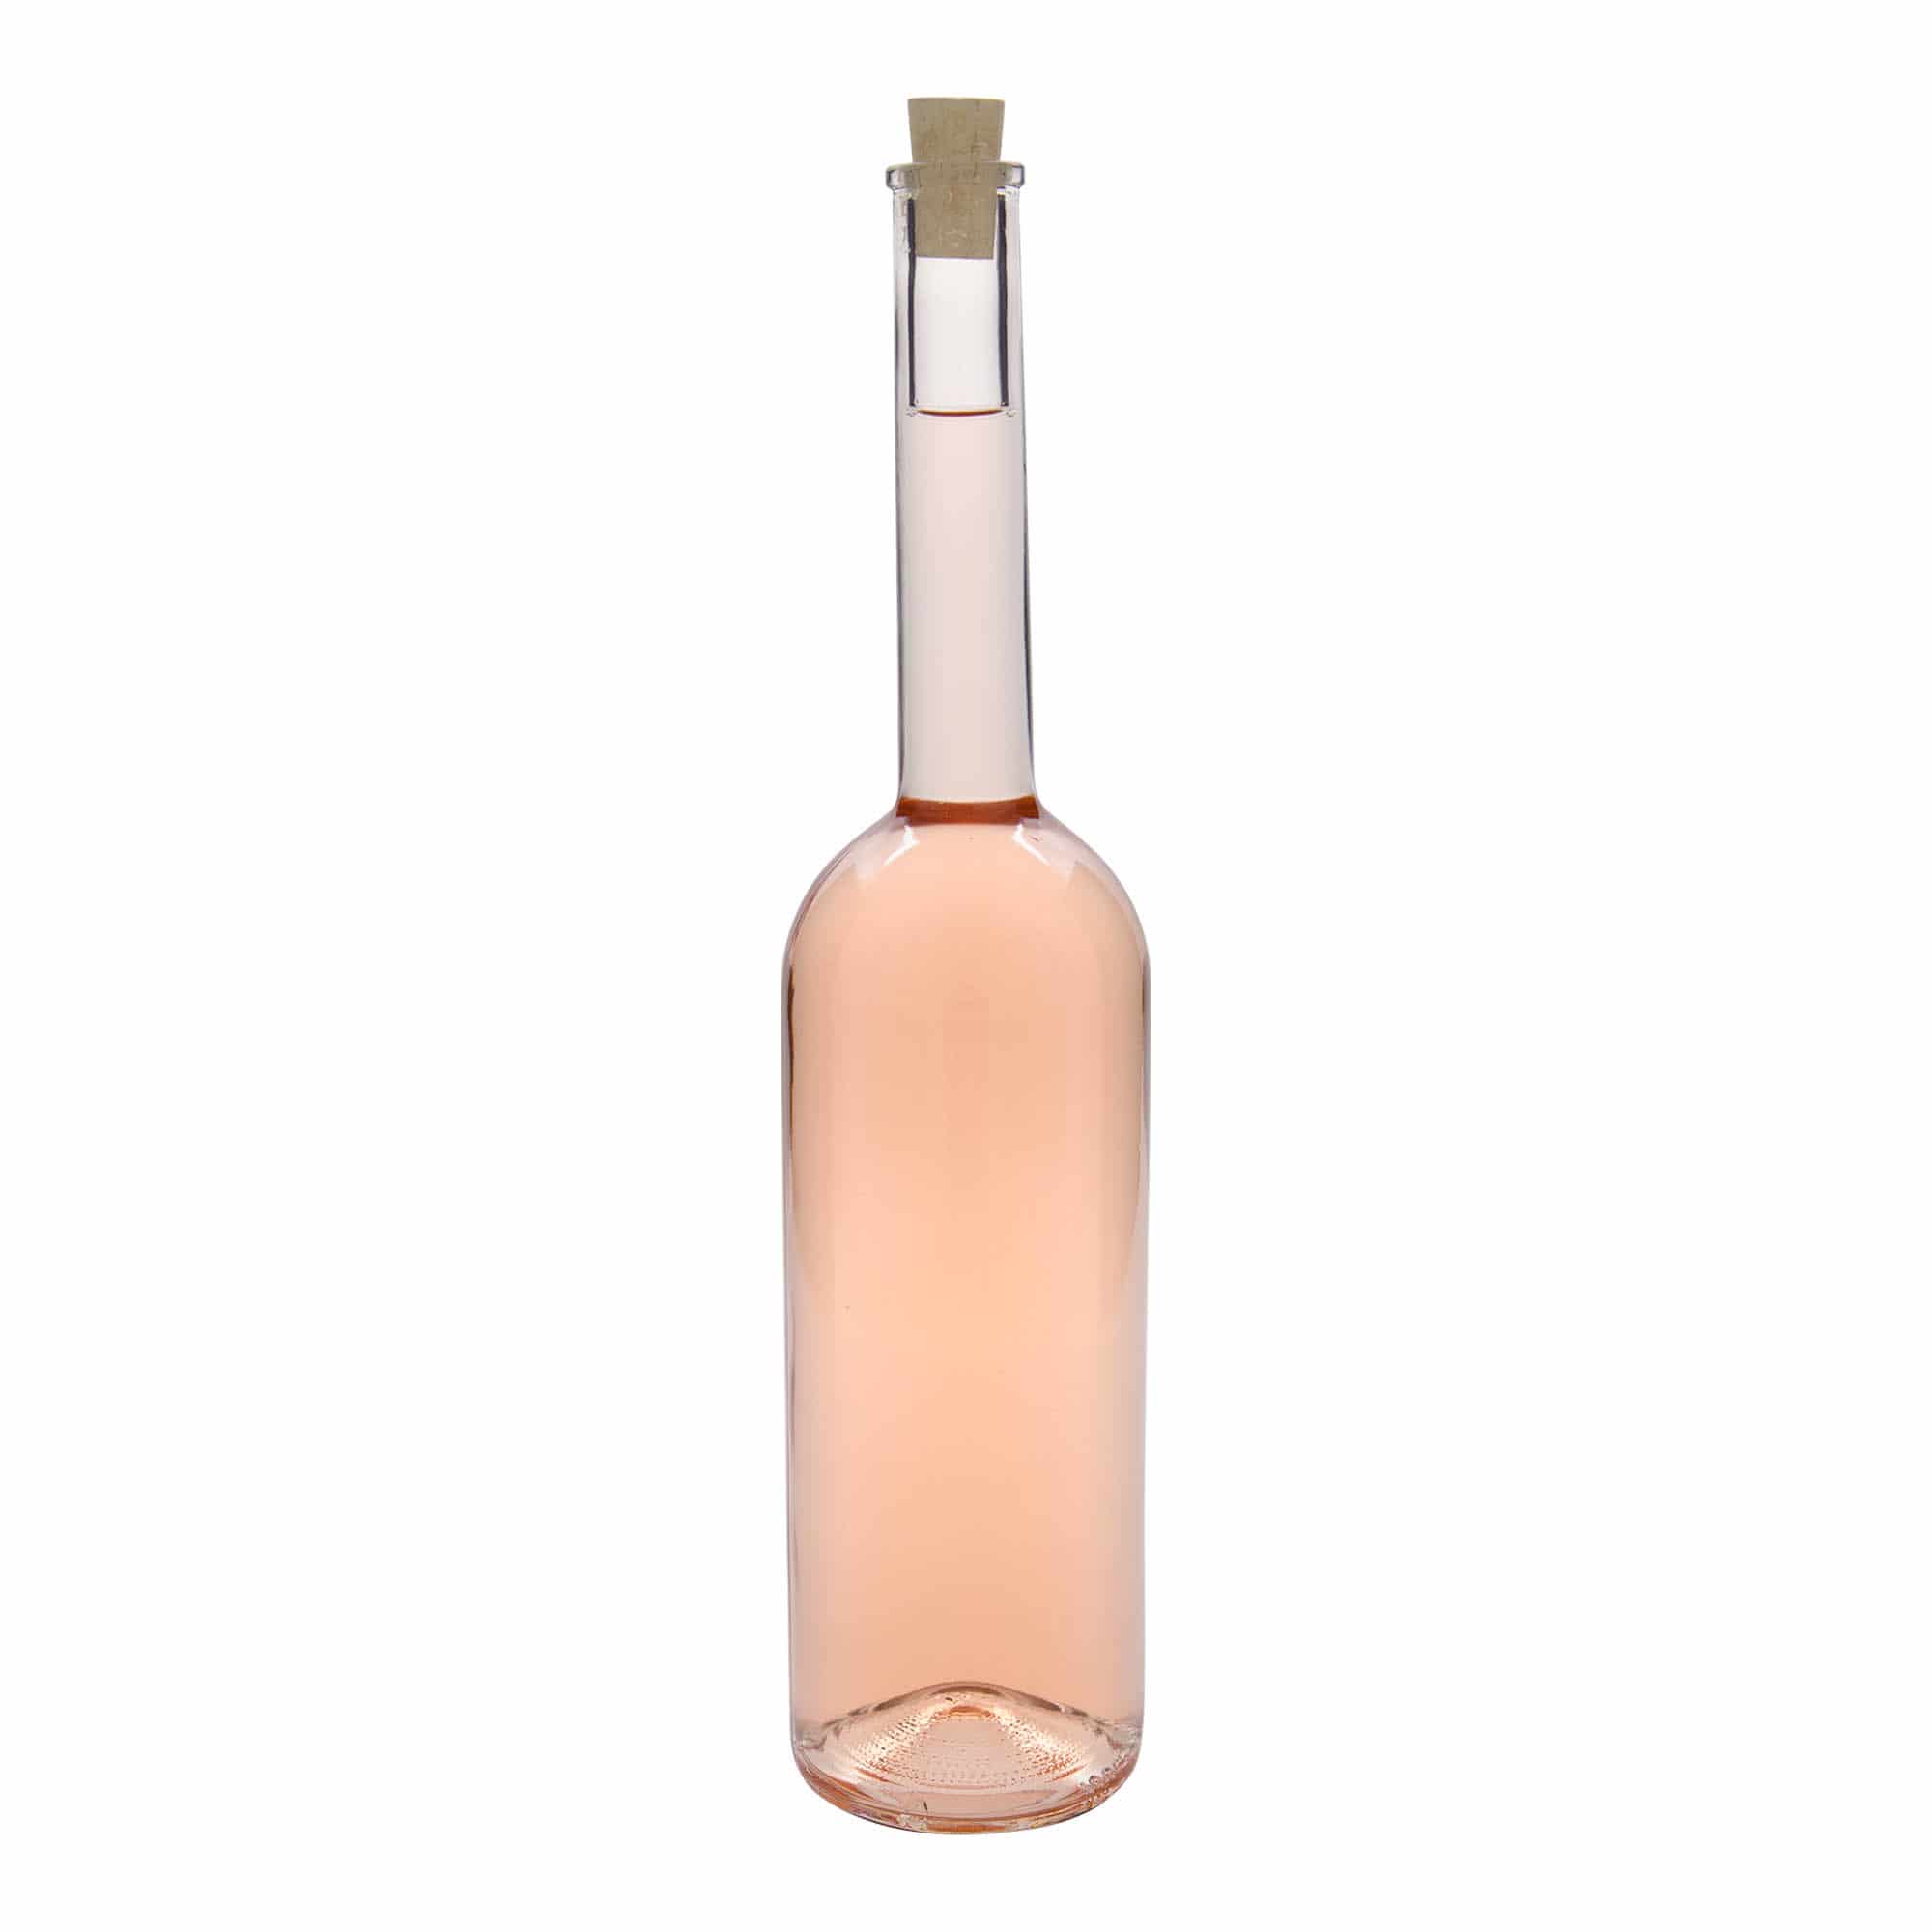 1,000 ml glass bottle 'Opera', closure: cork